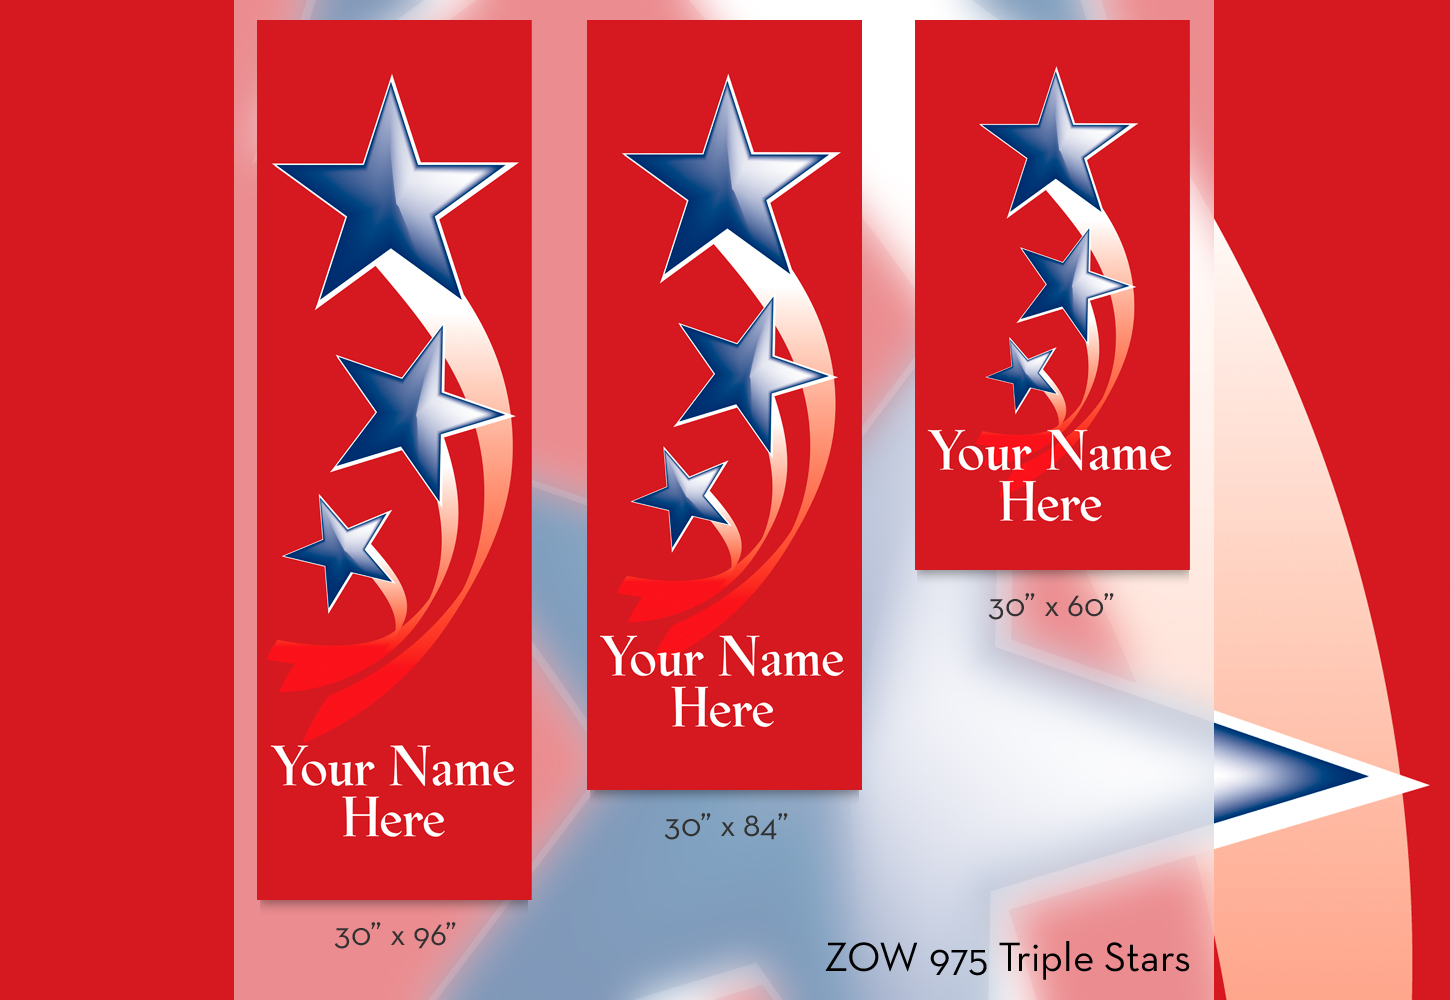 ZOW 975 Triple Stars